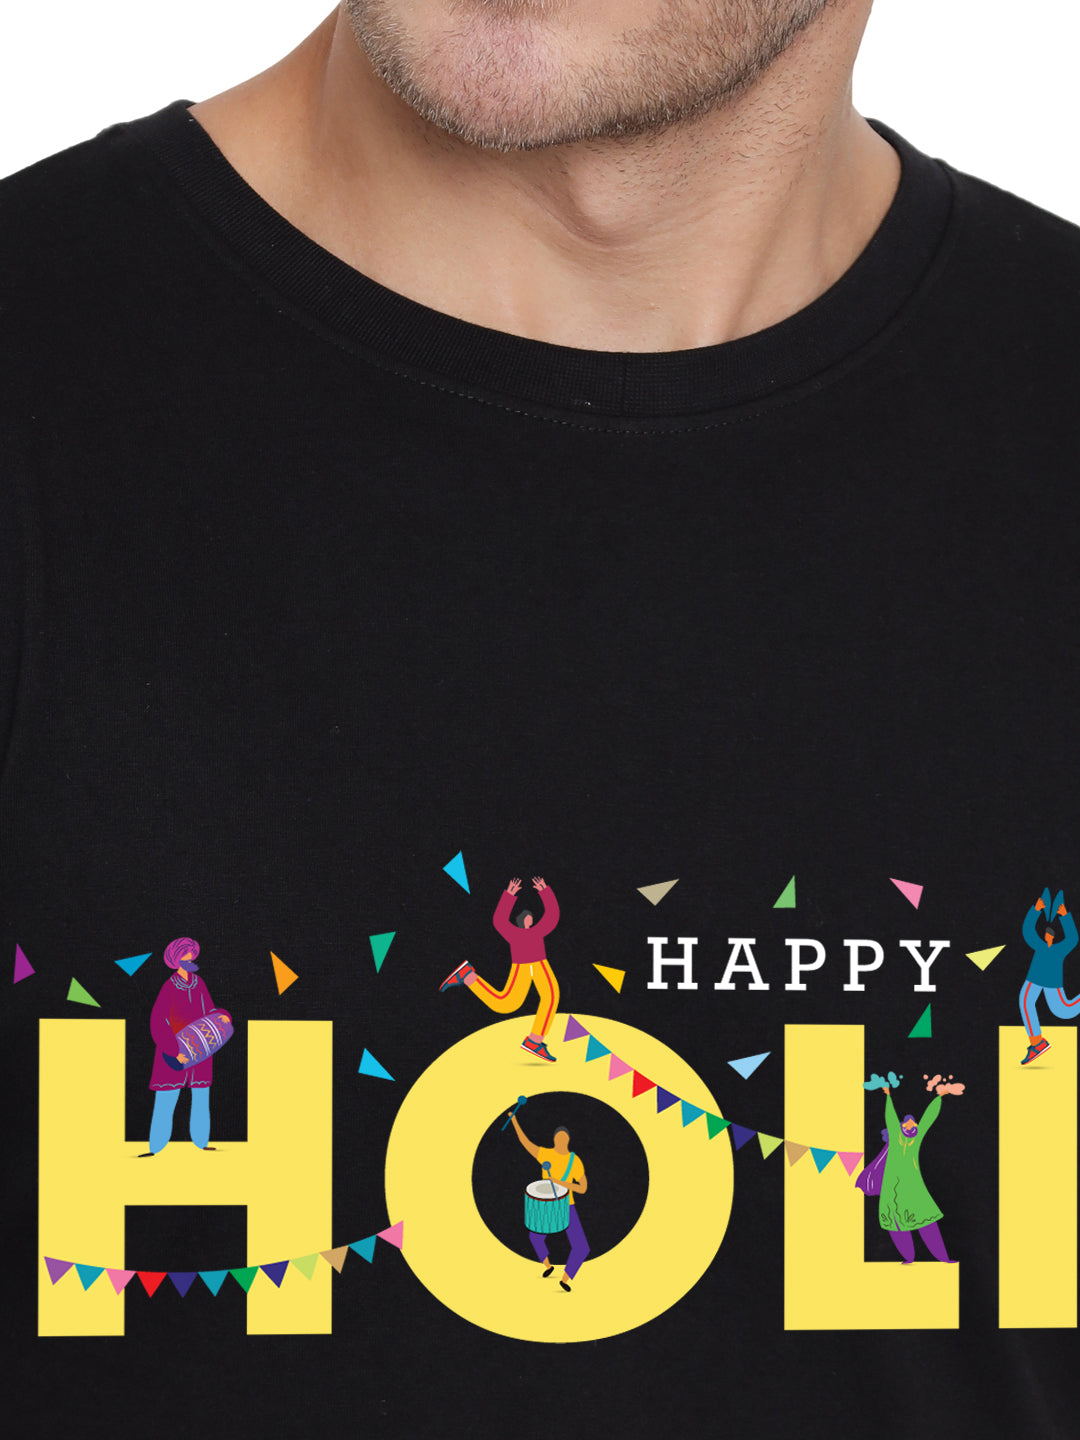 Happy Holi Men's Tshirt